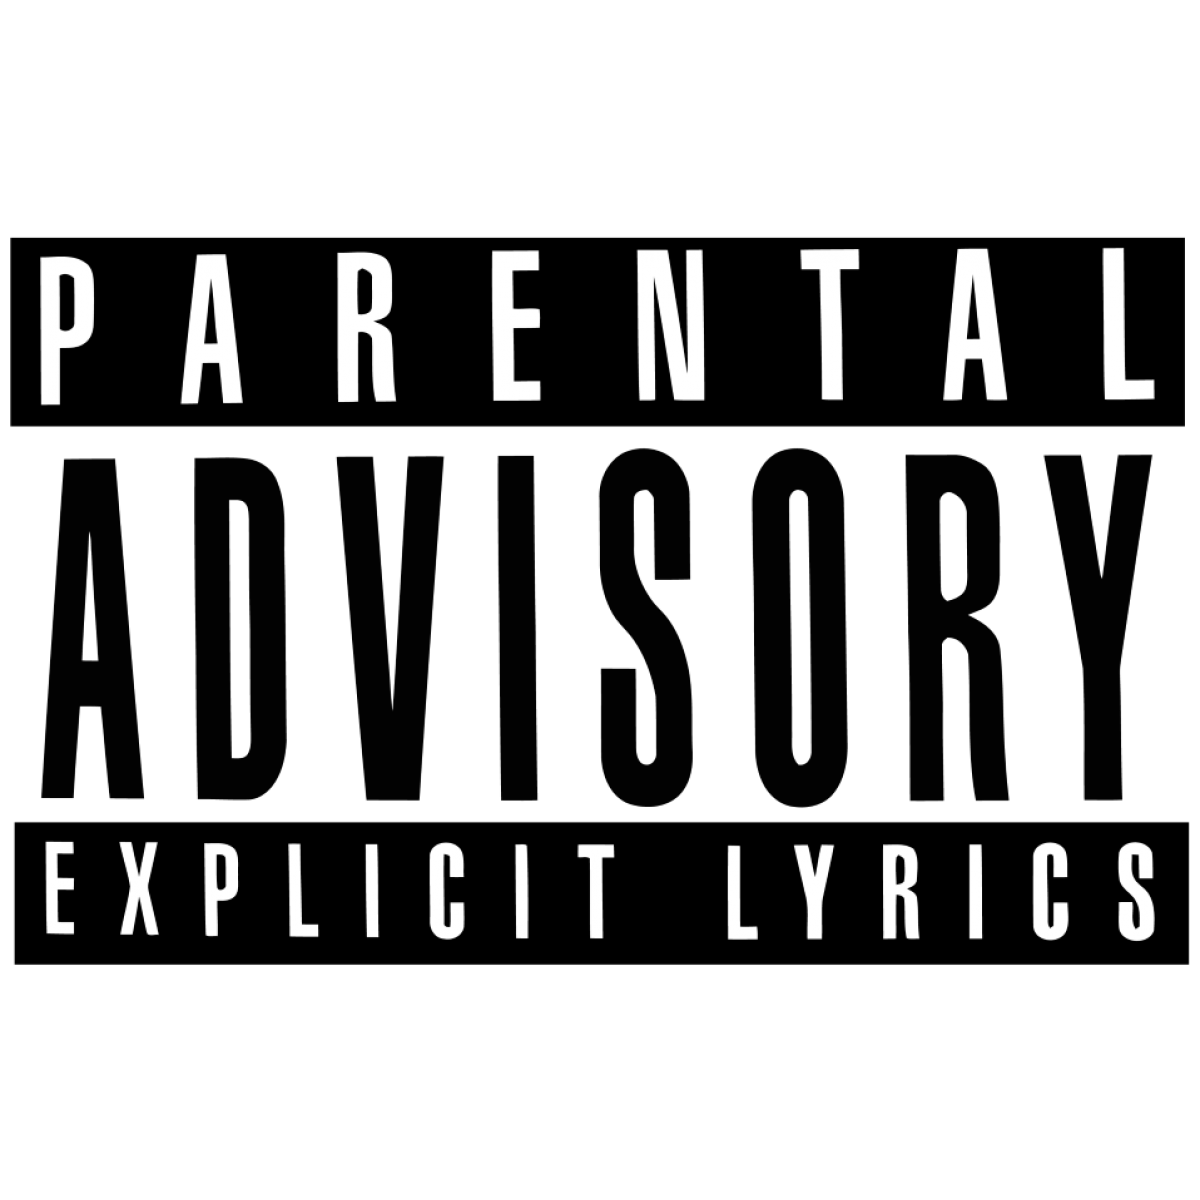 Parental Advisory Explicit Lyrics transparent PNG.